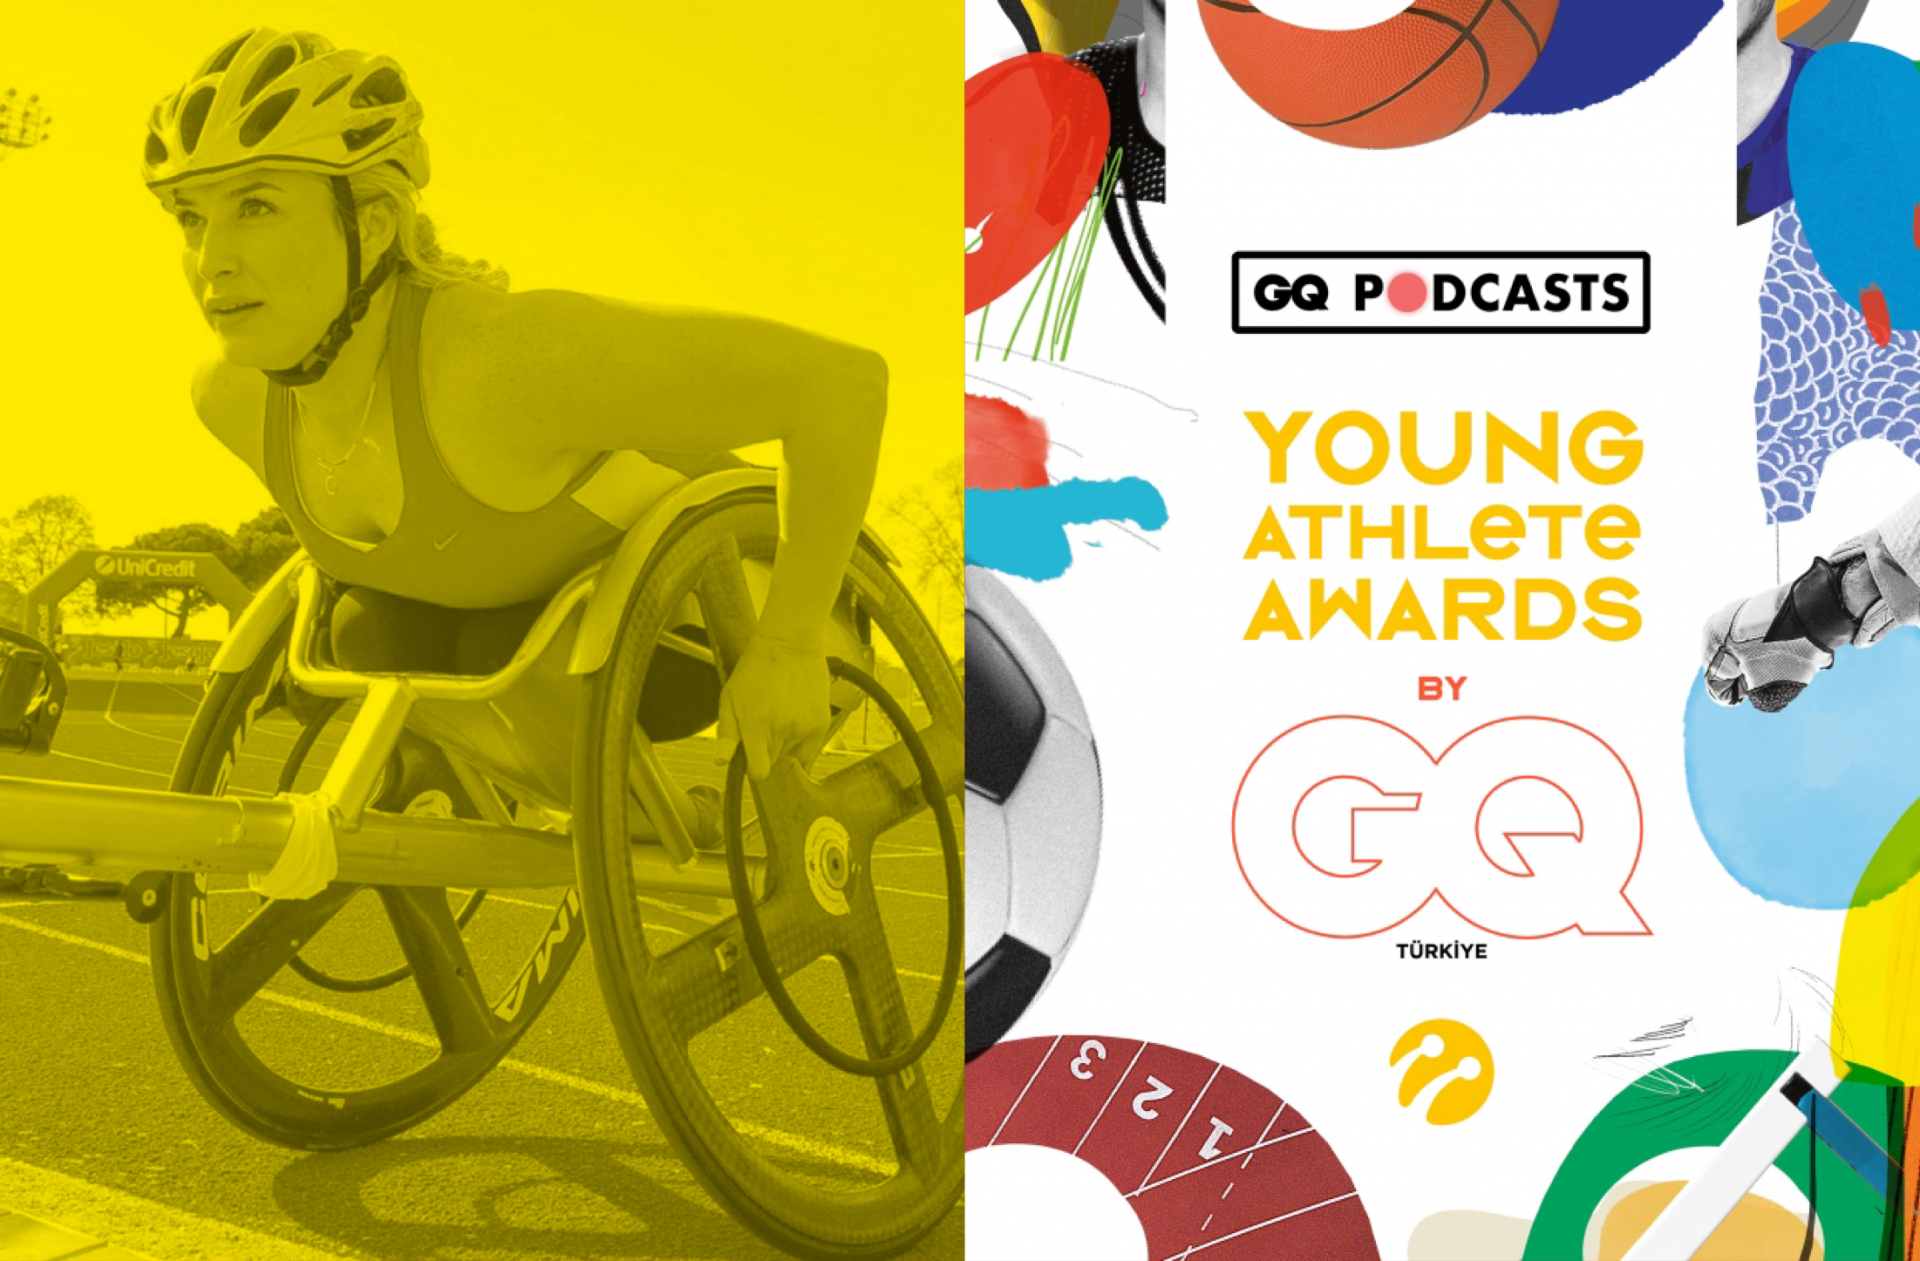 Paralimpik Atlet Hamide Kurt 2024 Madalya Hedefinde | GQ Podcasts: Young Athlete Awards